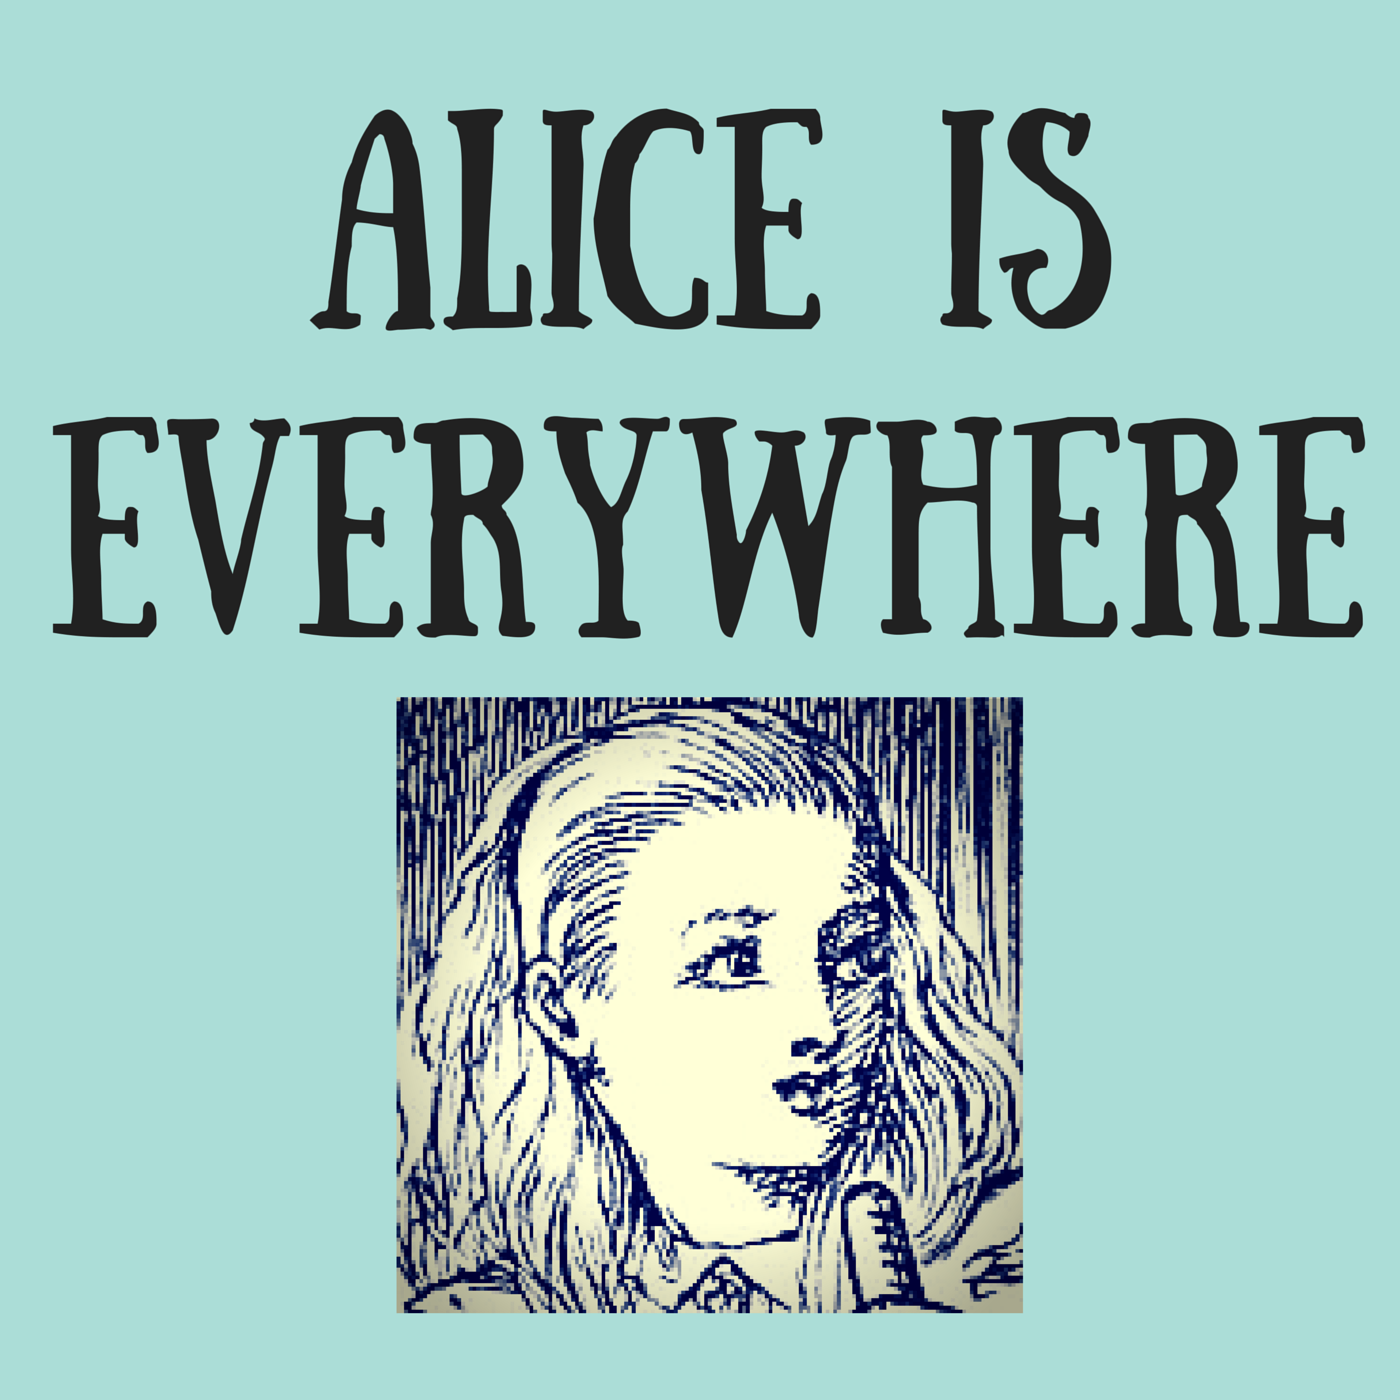 Alice is a student. Беатрис хэч. Беатрис и Льюис Кэрролл. Алиса подкаст резервация. Фантасмагория Льюис Кэрролл книга.